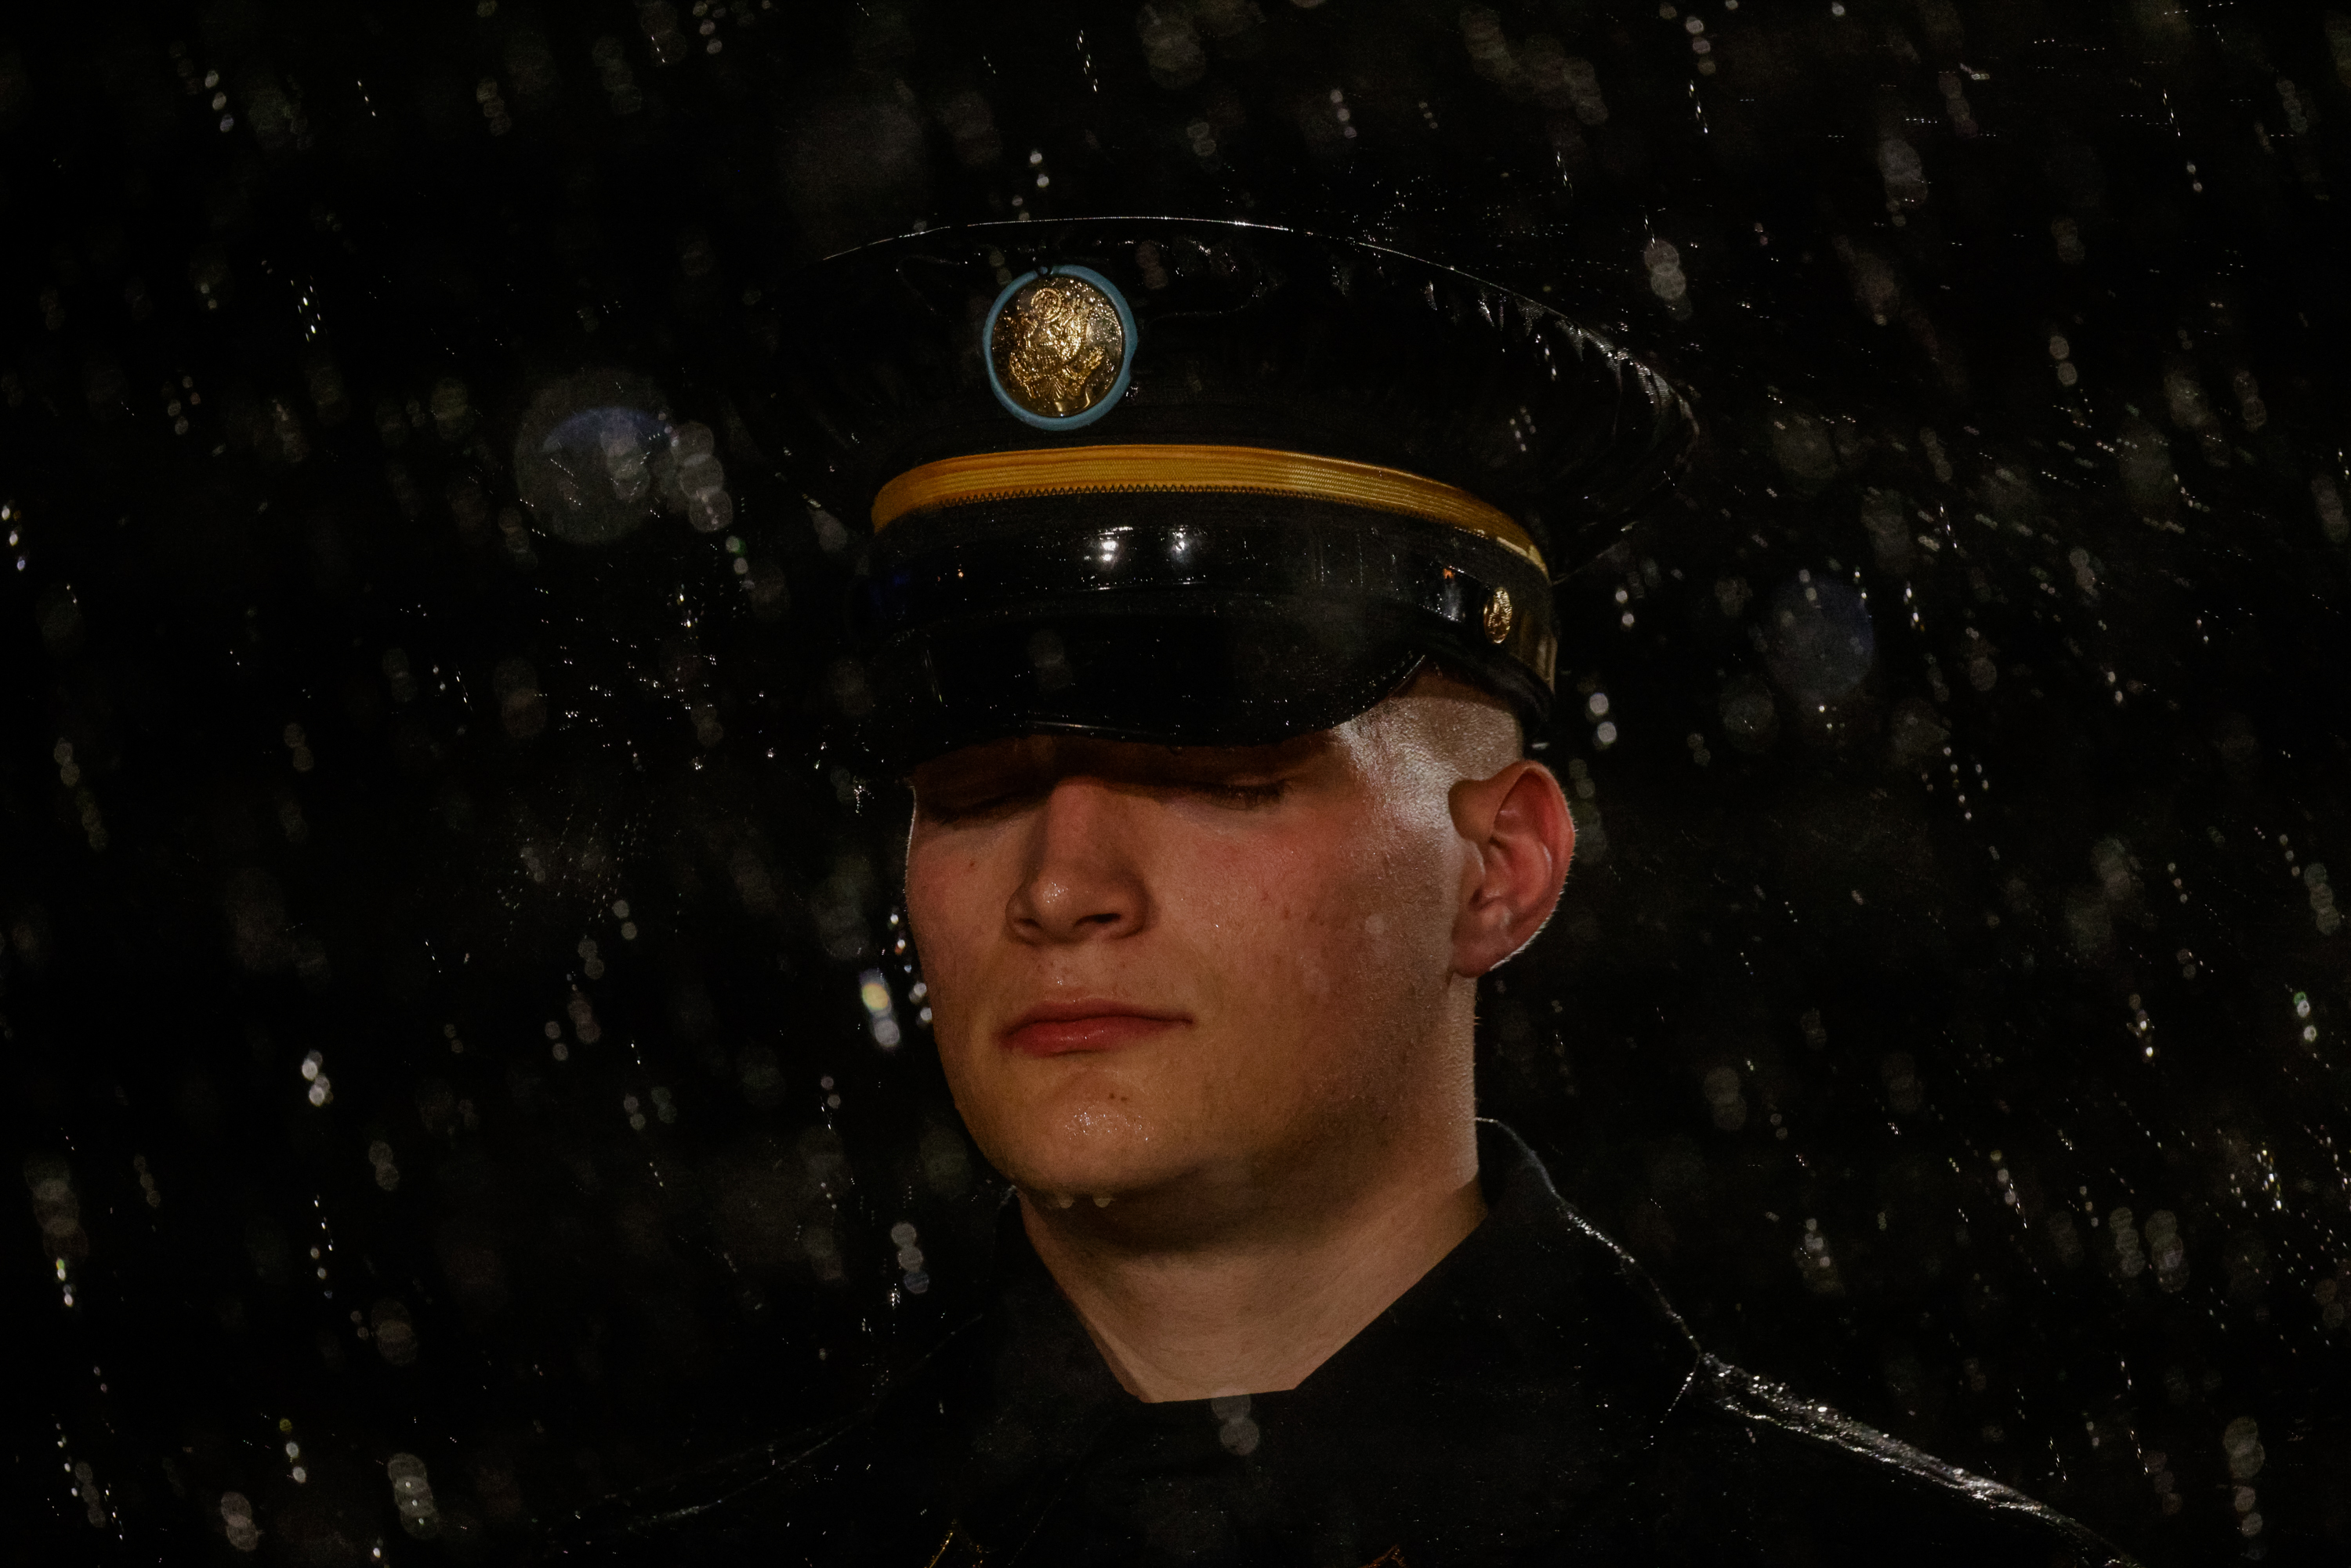 A service member stands in the rain